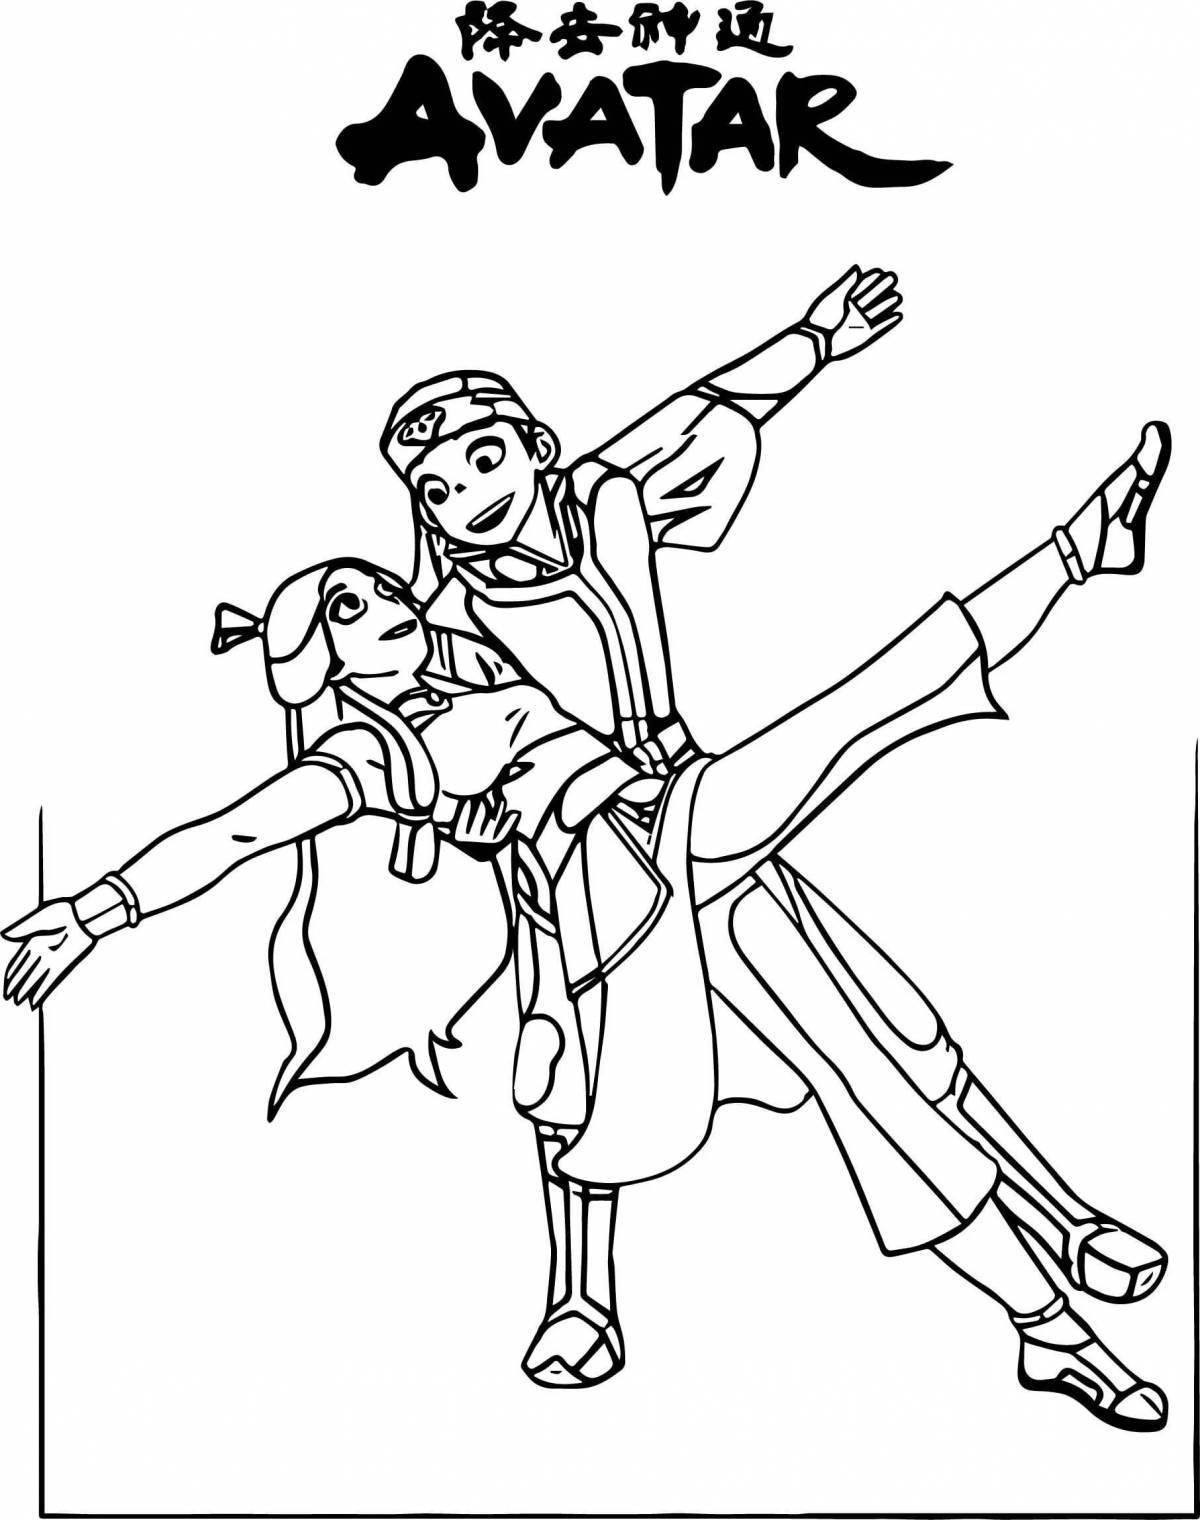 Aang's magic coloring page